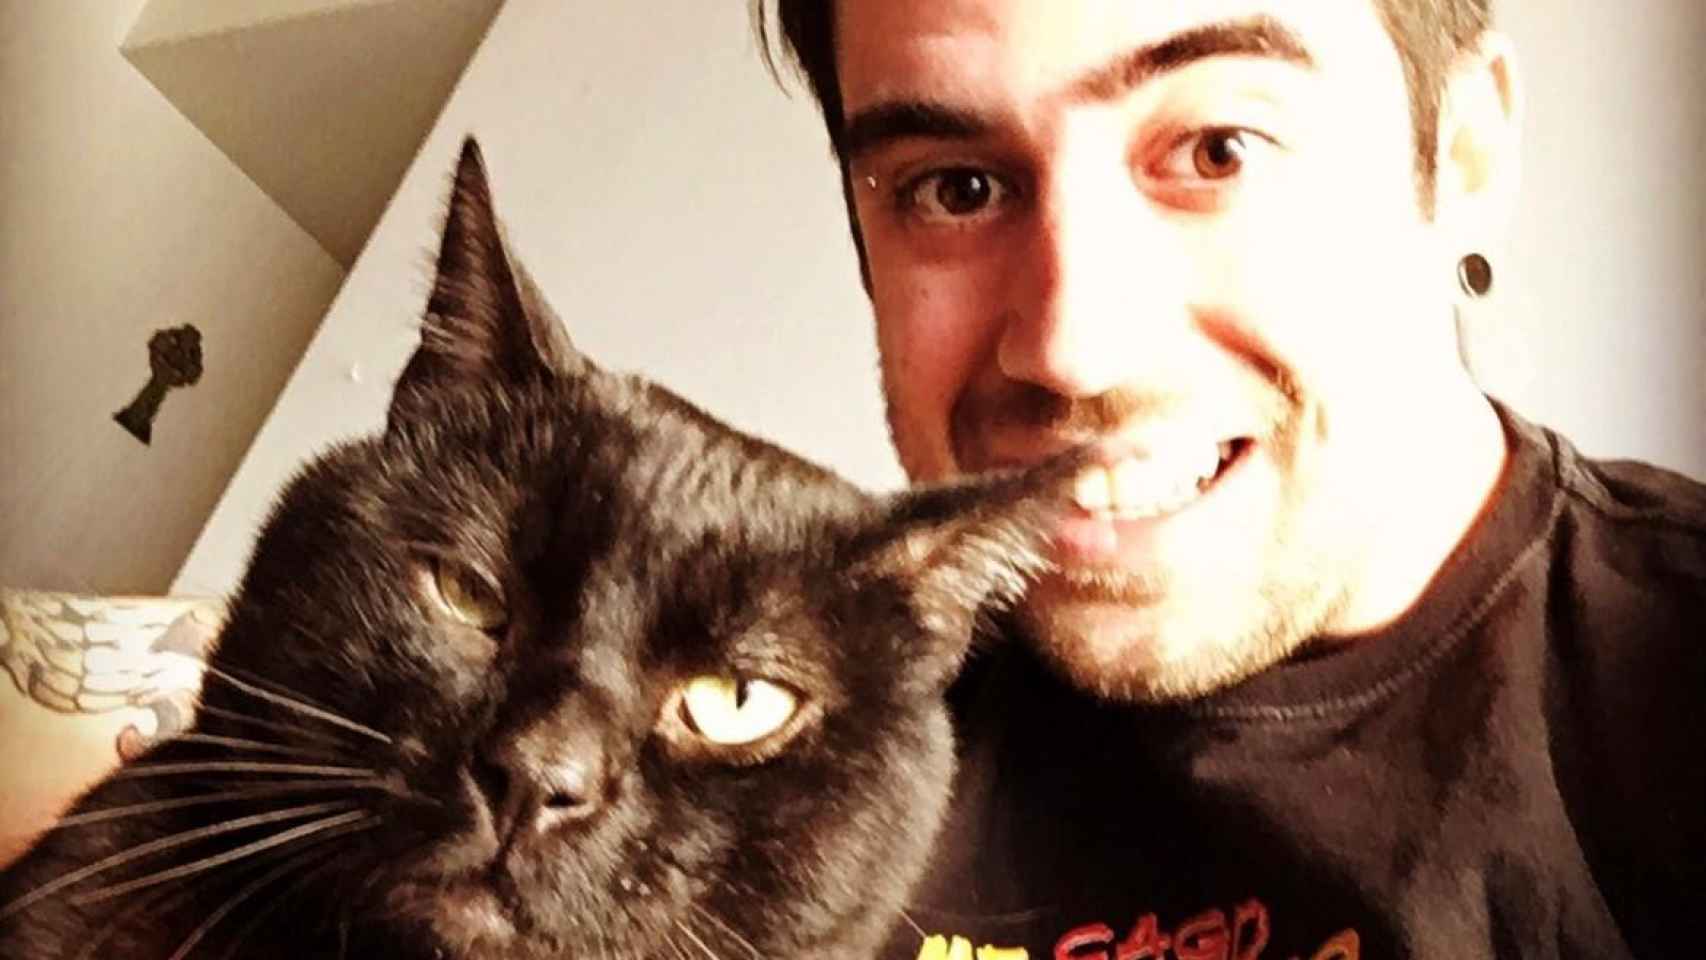 El 'streamer' español, Auronplay, junto a su gato fallecido, Don Gato / TWITTER